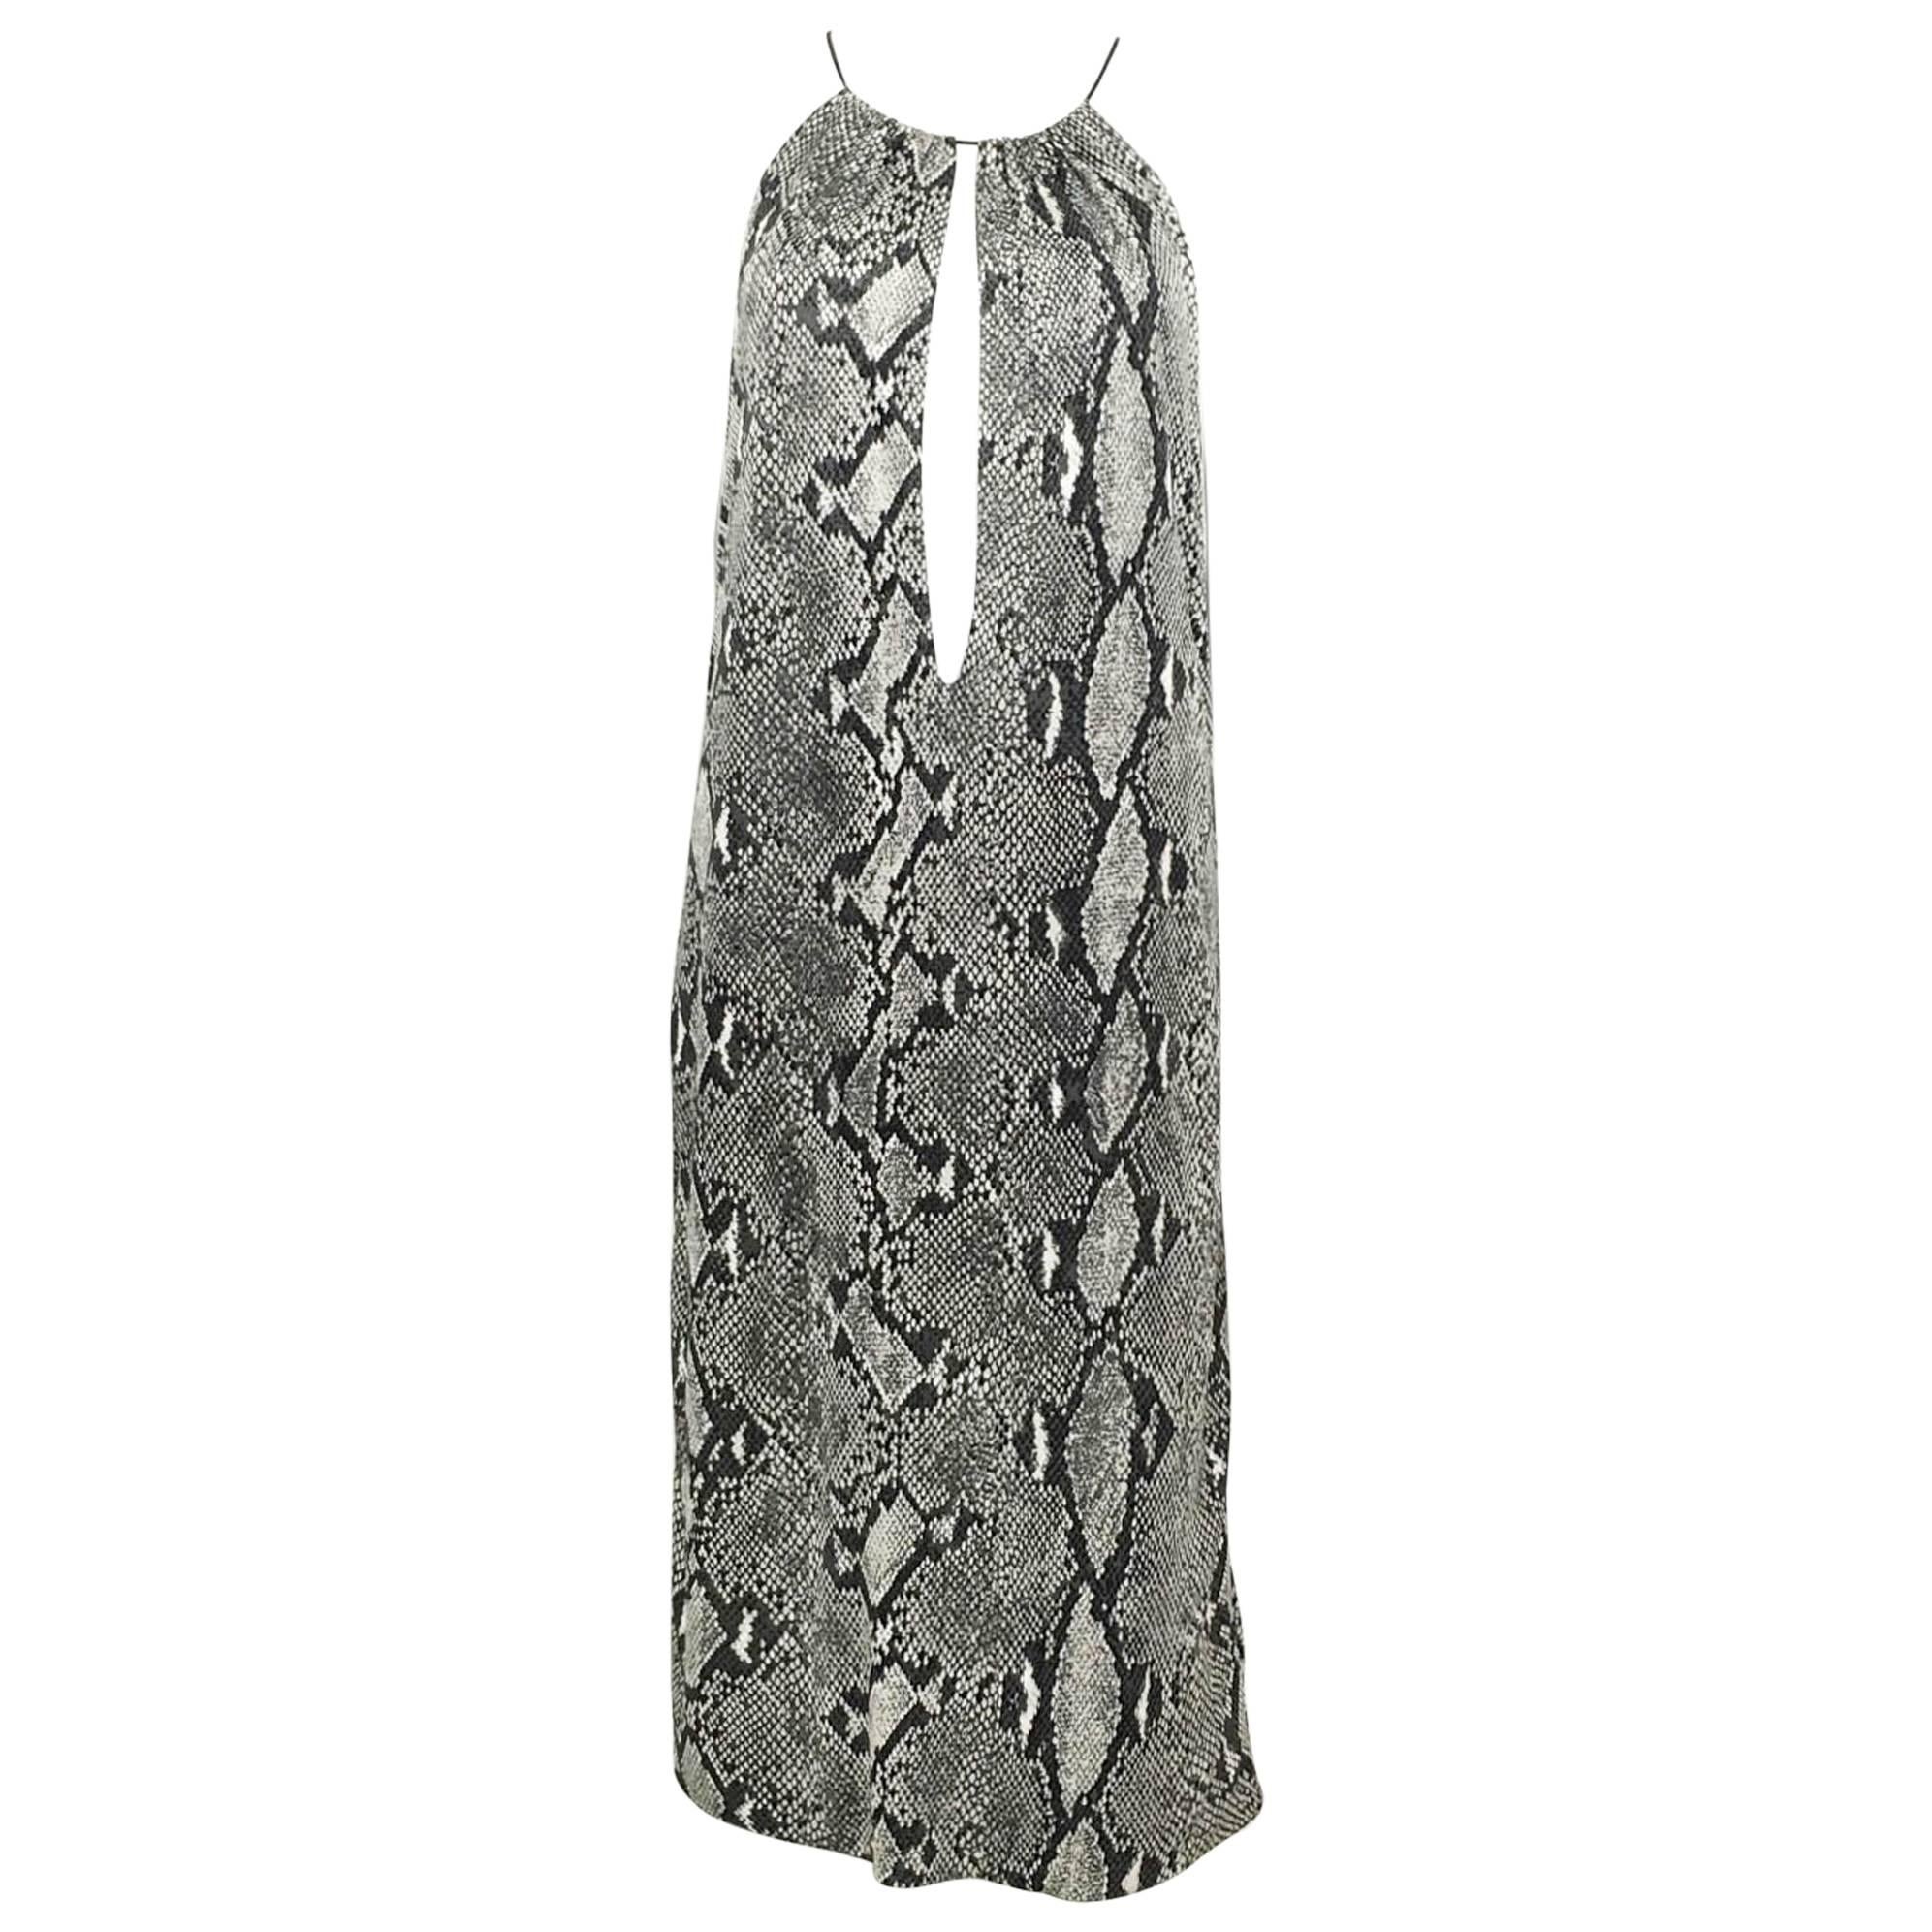 Gucci by Tom Ford Runway Python Print Dress - Circa 2000 For Sale